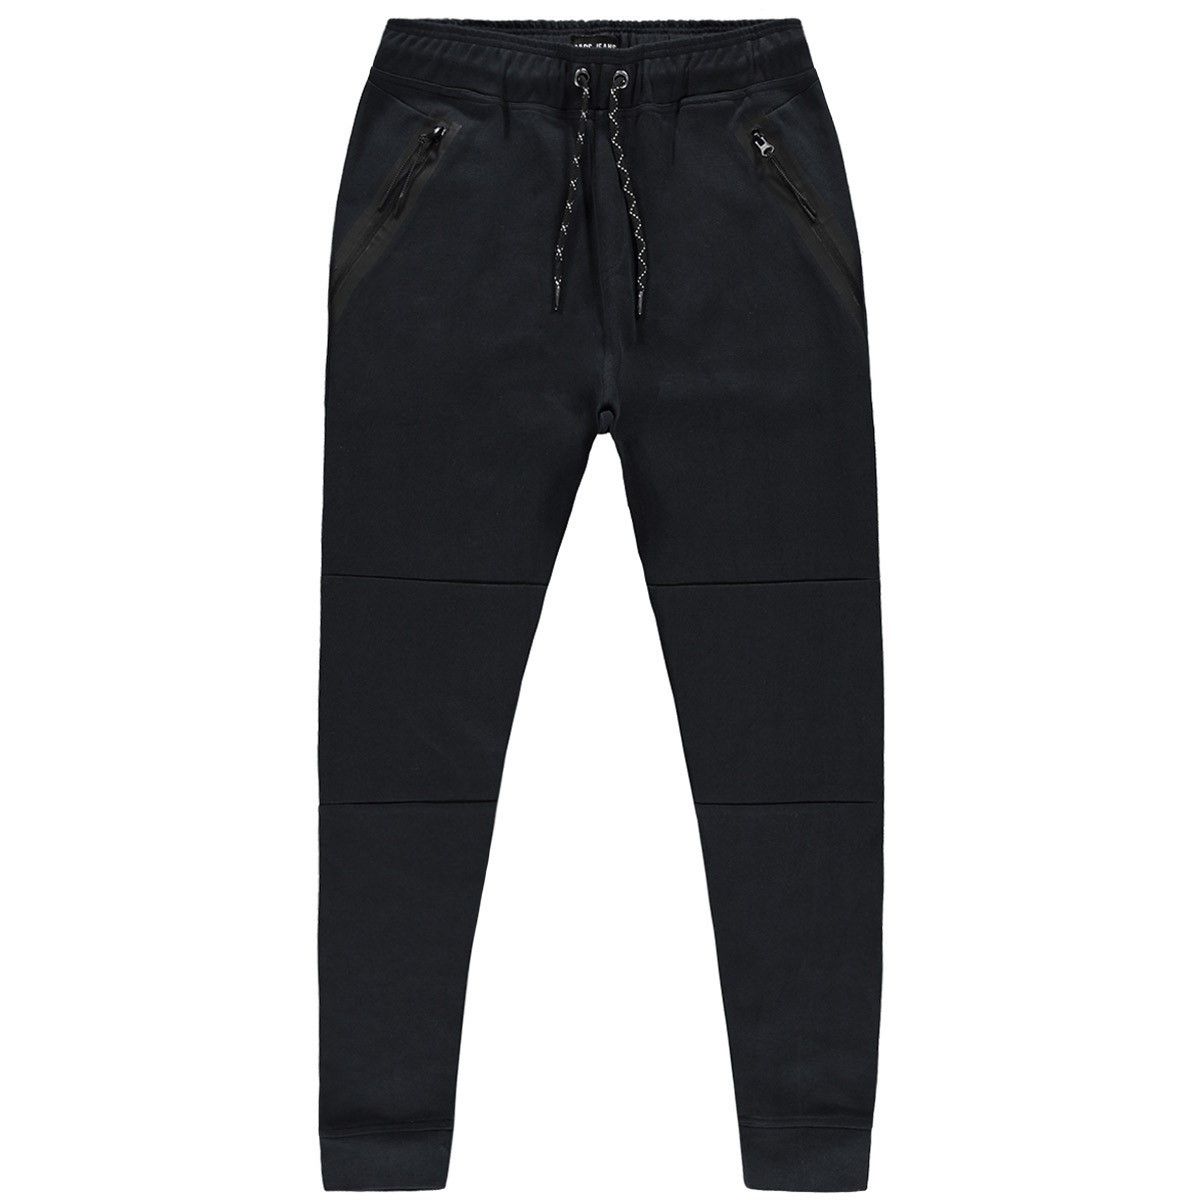 Cars jeans Pants Lax Jr. 01 black 2900138570070